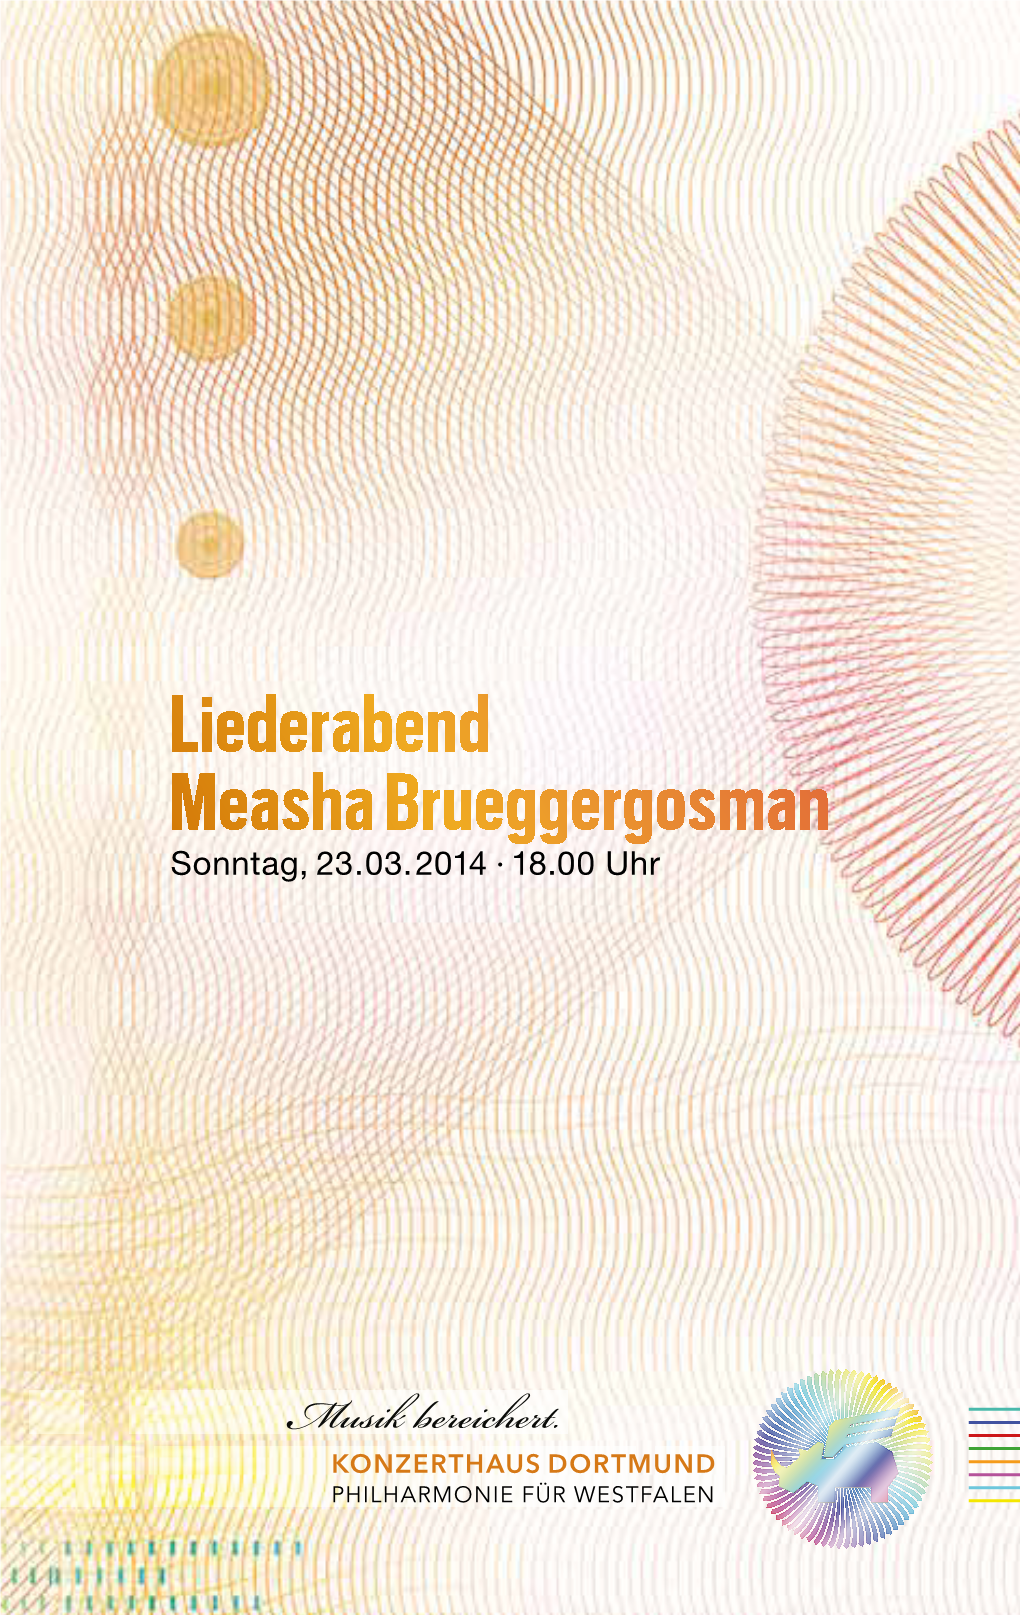 Liederabend Measha Brueggergosman Sonntag, 23.03.2014 · 18.00 Uhr